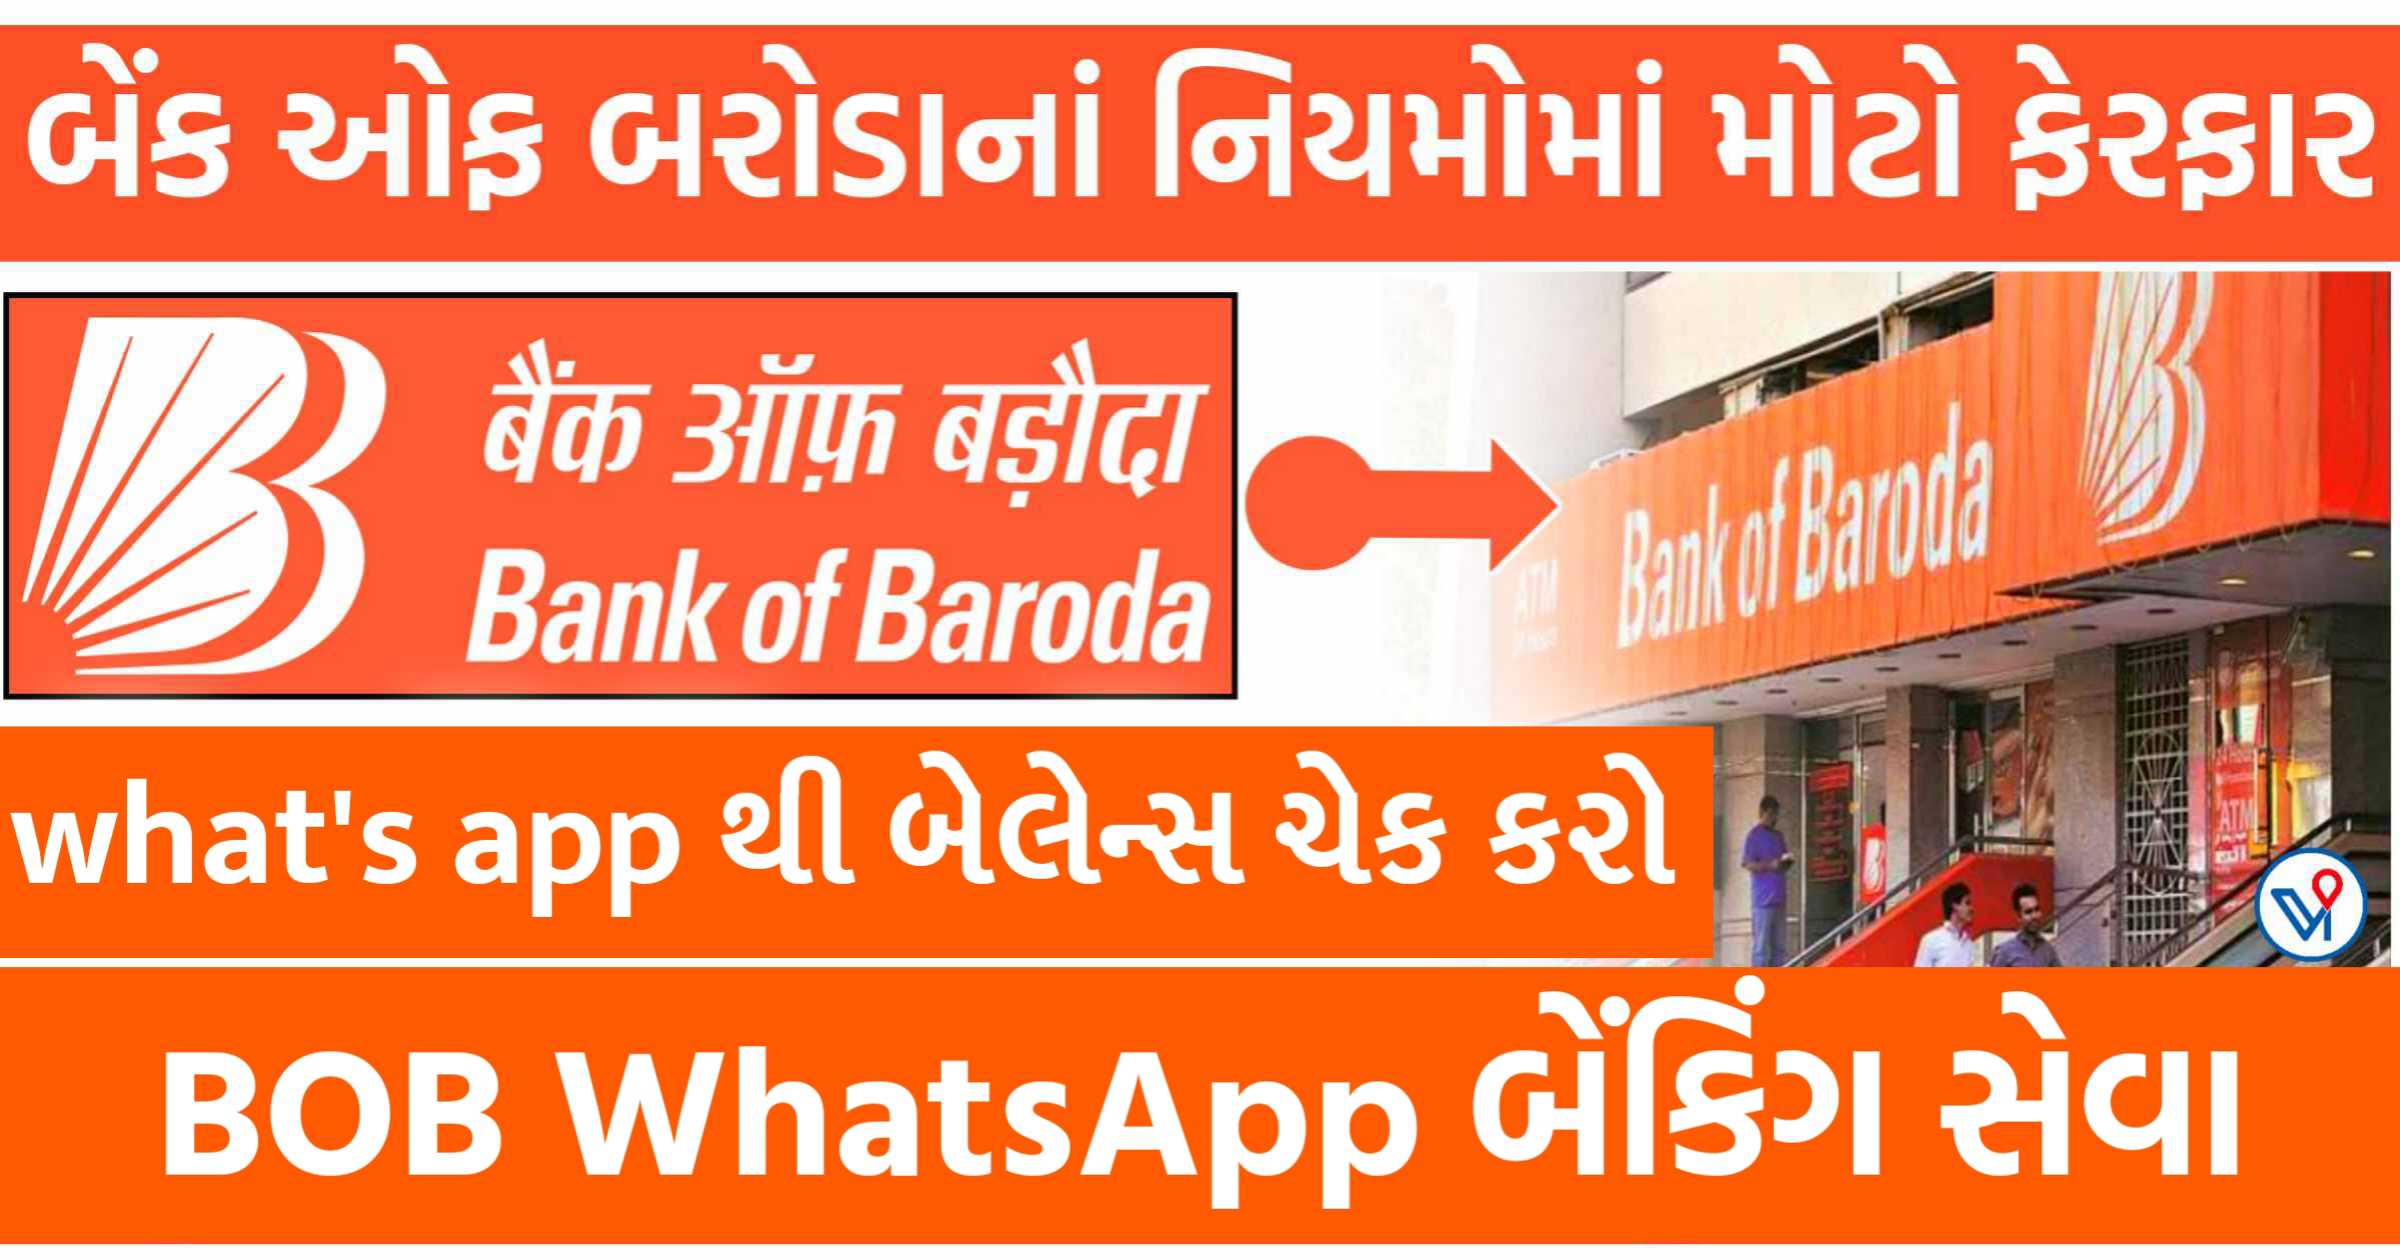 BOB WhatsApp બેંકિંગ સેવા: બેંક ઓફ બરોડા WhatsApp દ્વારા બેંક બેલેન્સ ચેક કરી શકાશે